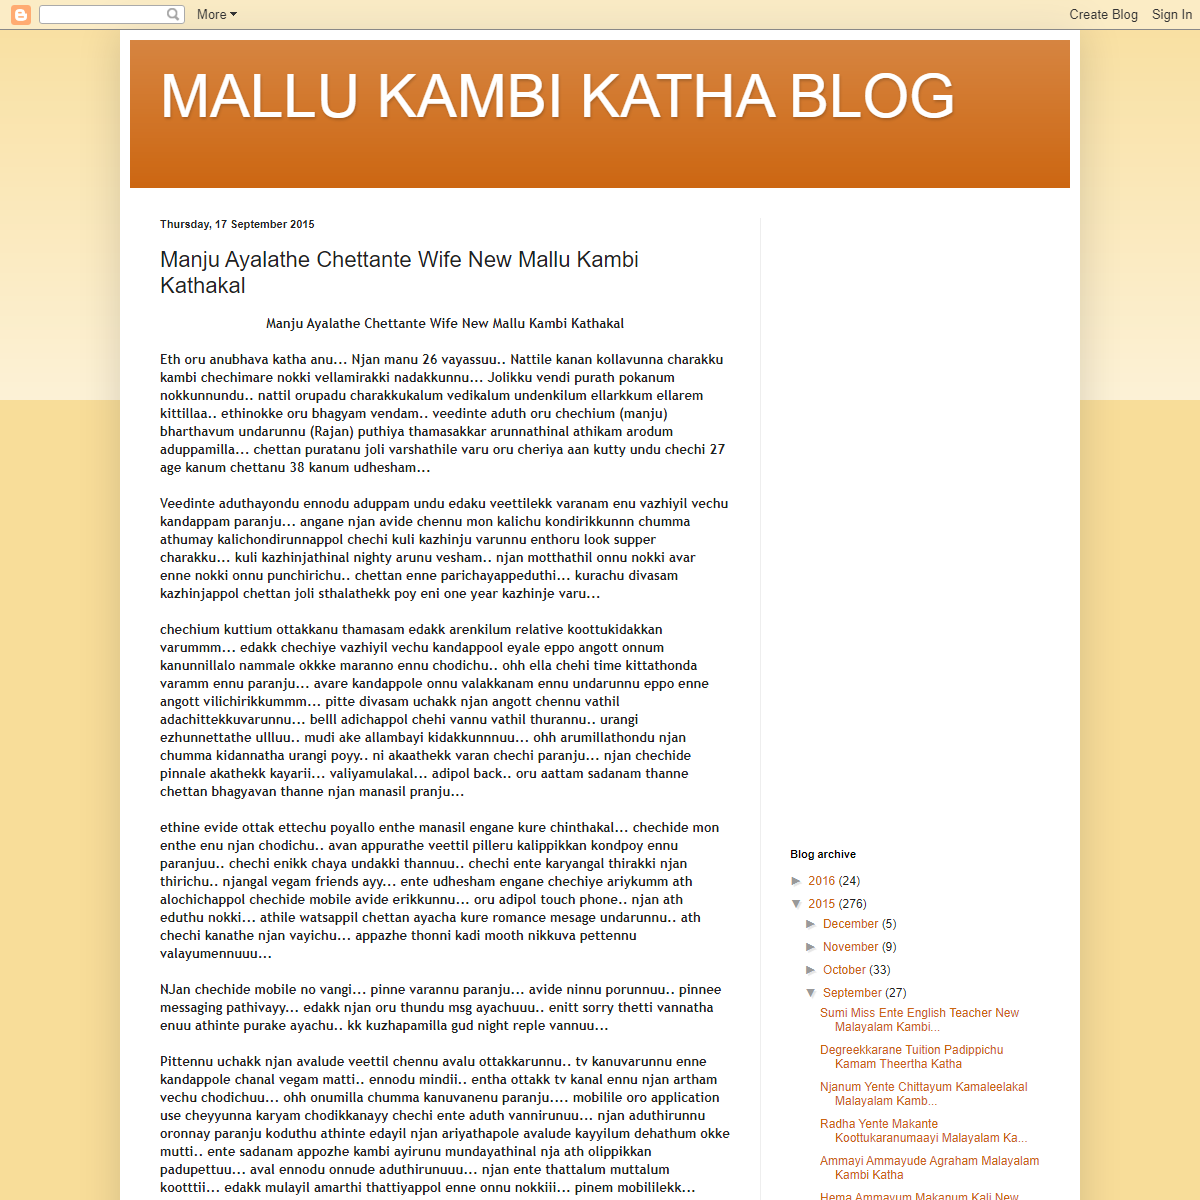 A complete backup of https://mallukambikathablog.blogspot.com/2015/09/manju-ayalathe-chettante-wife-new-mallu.html